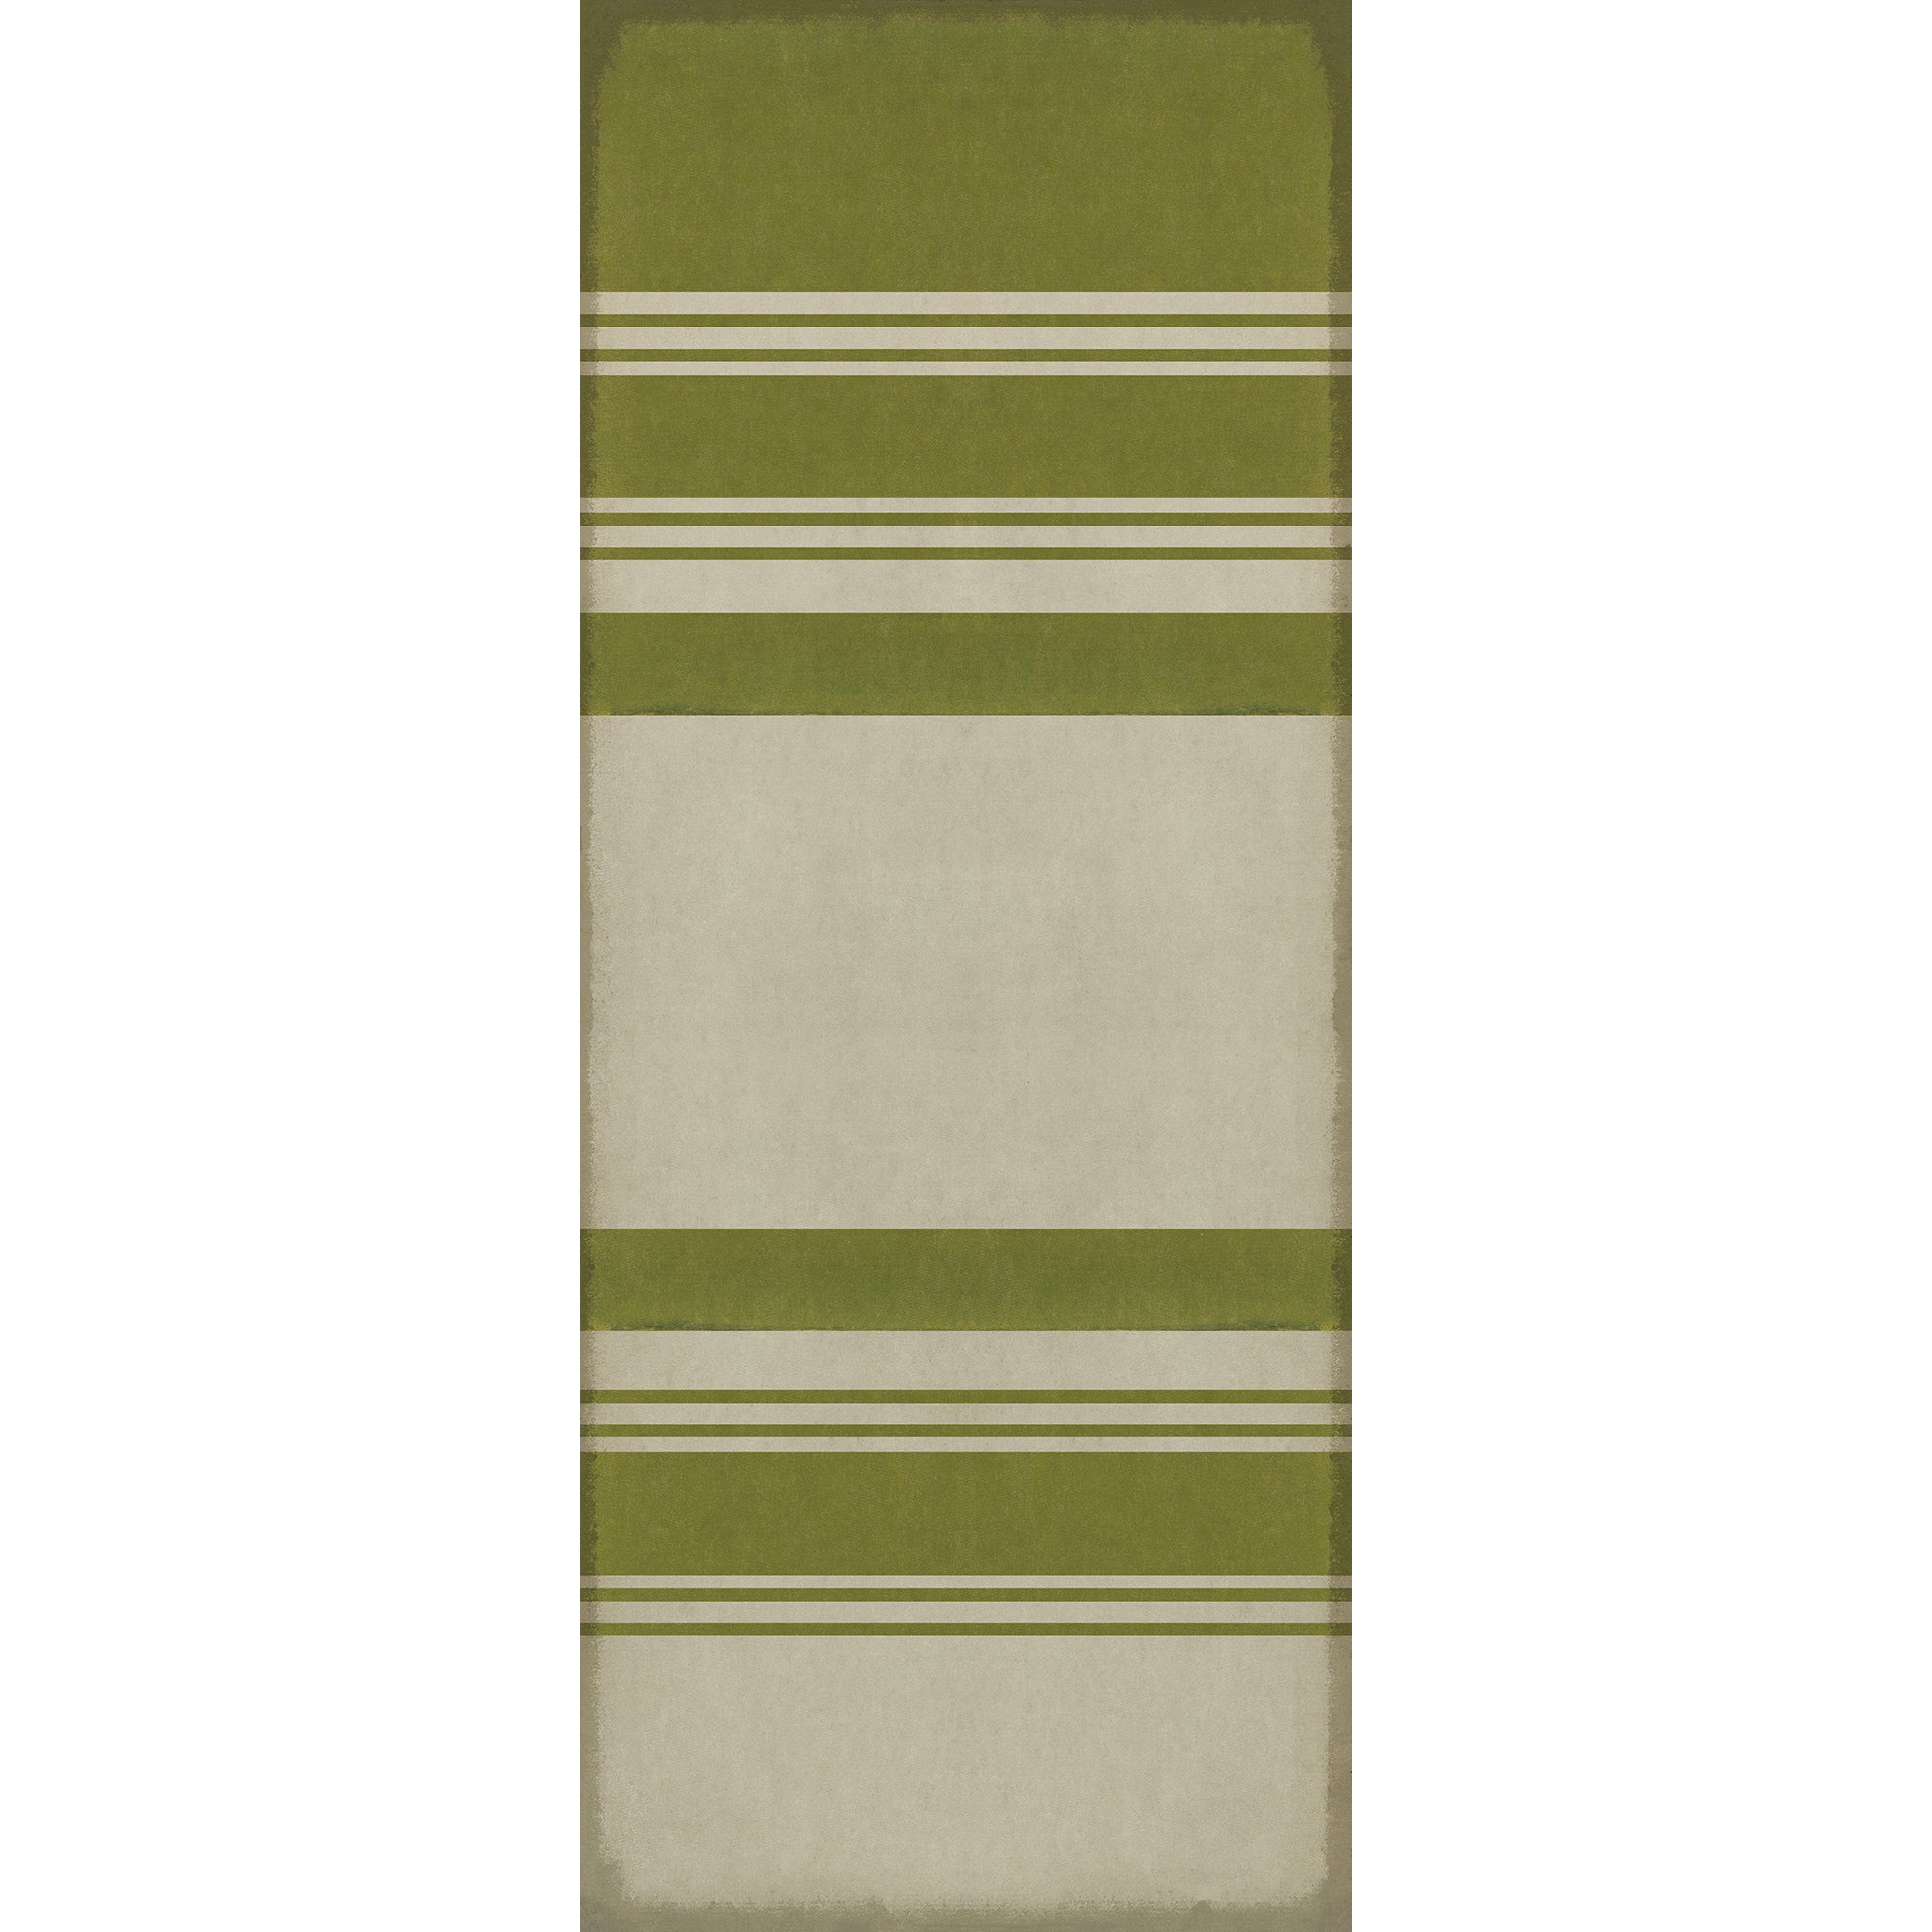 Pattern 50 Organic Stripes Green and White Vinyl Floor Cloth